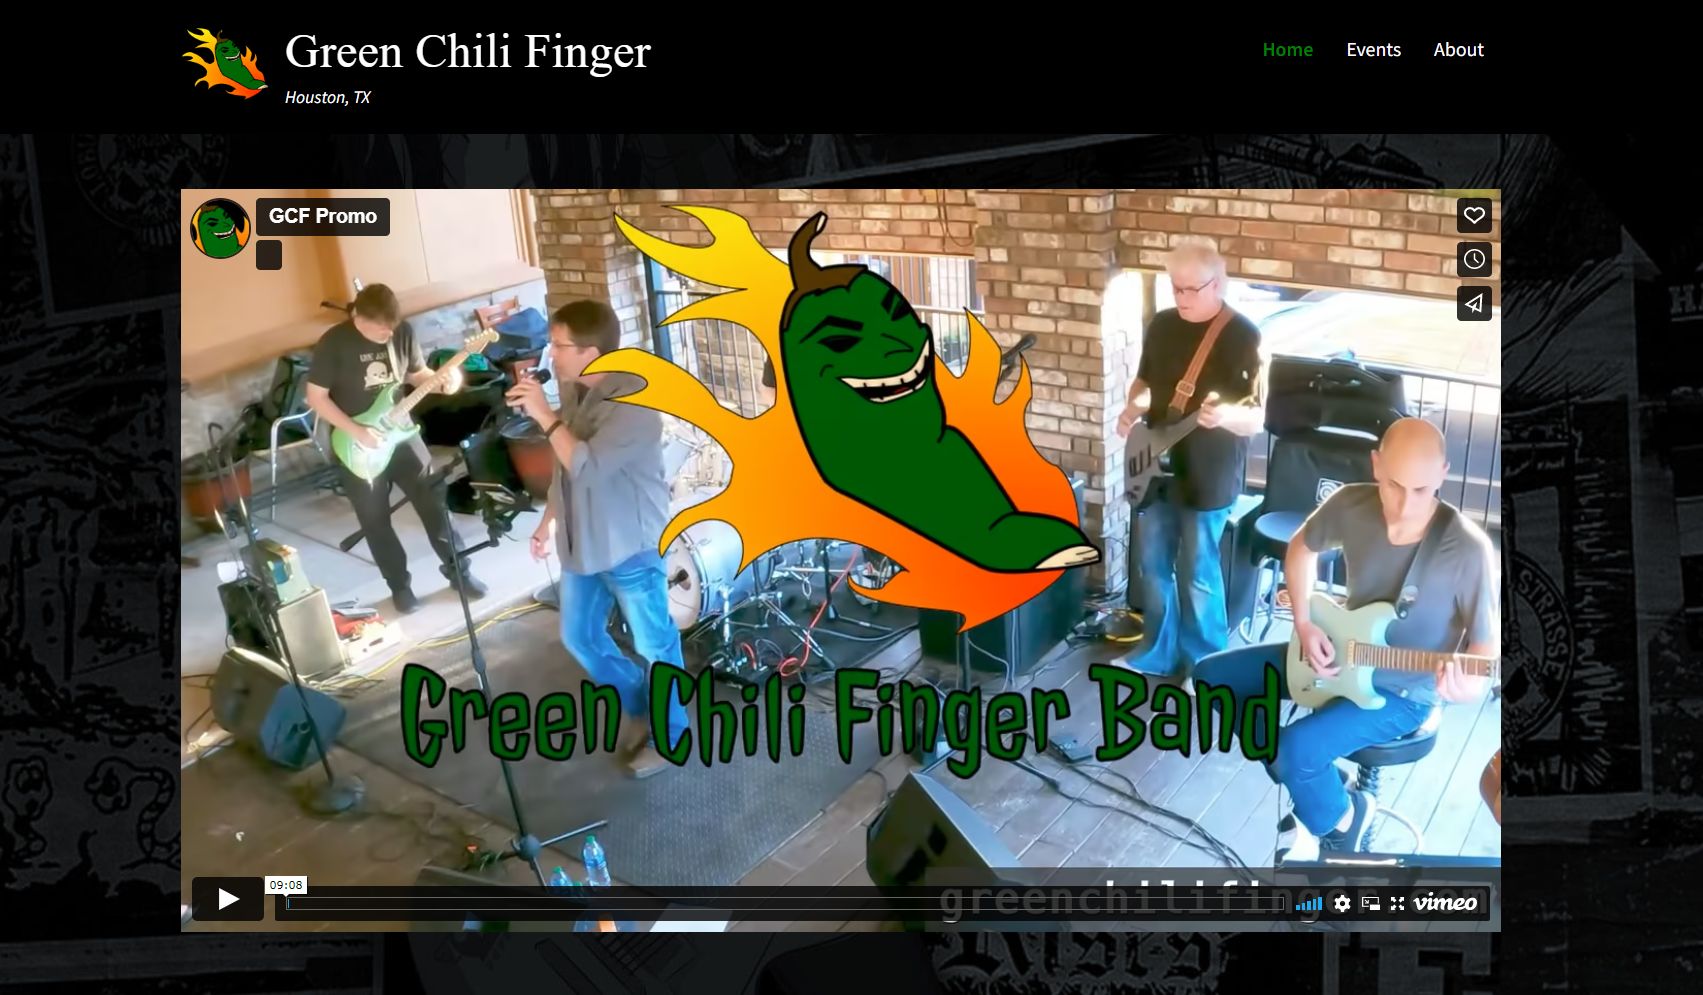 Green Chili Finger band logo